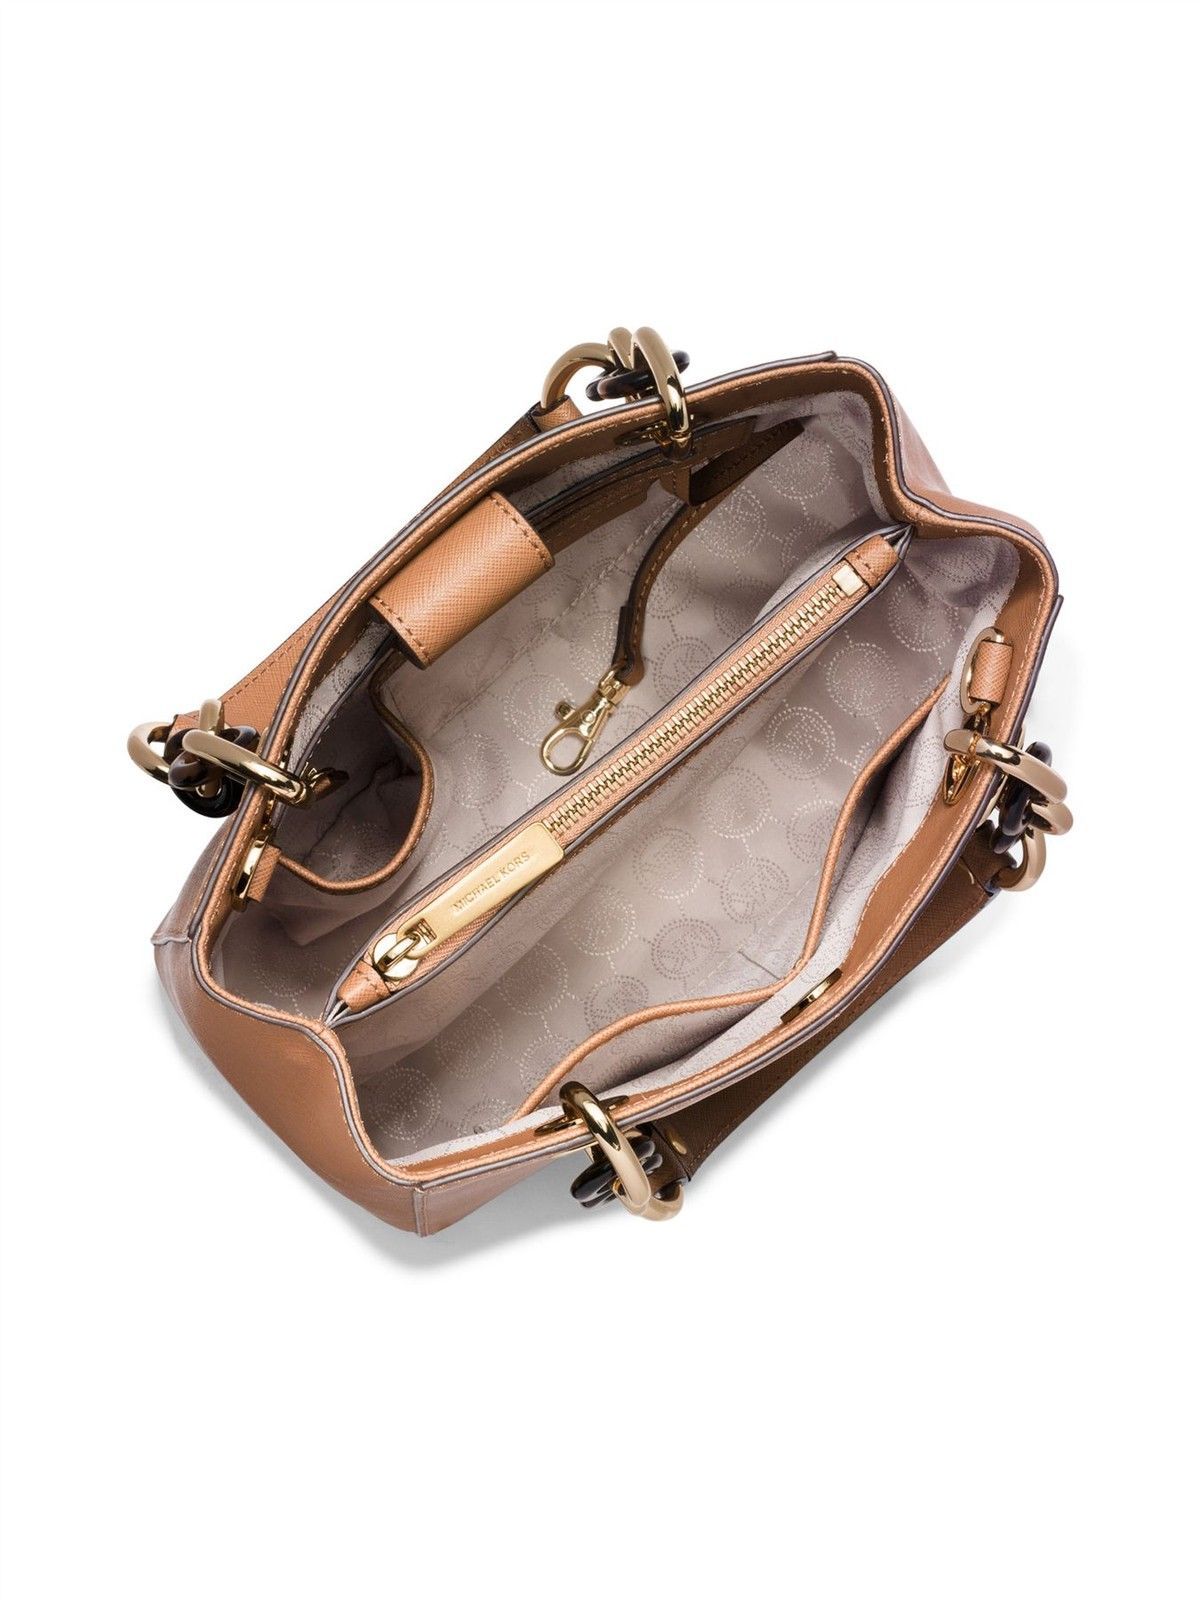 Michael Kors Cynthia Satchel soft pink chain bag leather triple compartment  $298